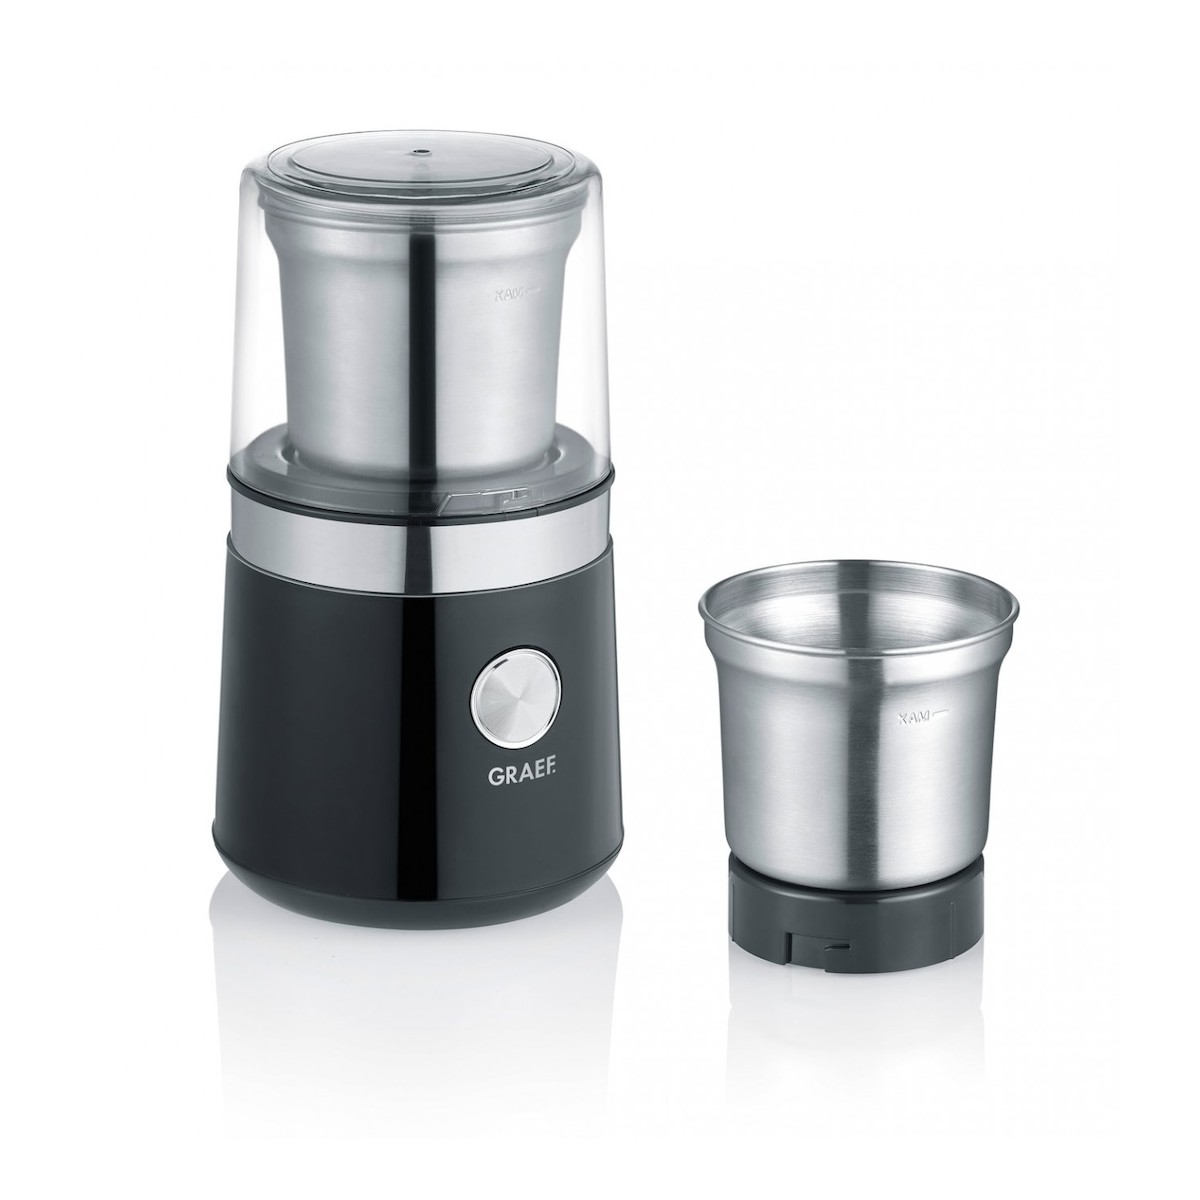 GRAEF CM102 coffee and spice grinder